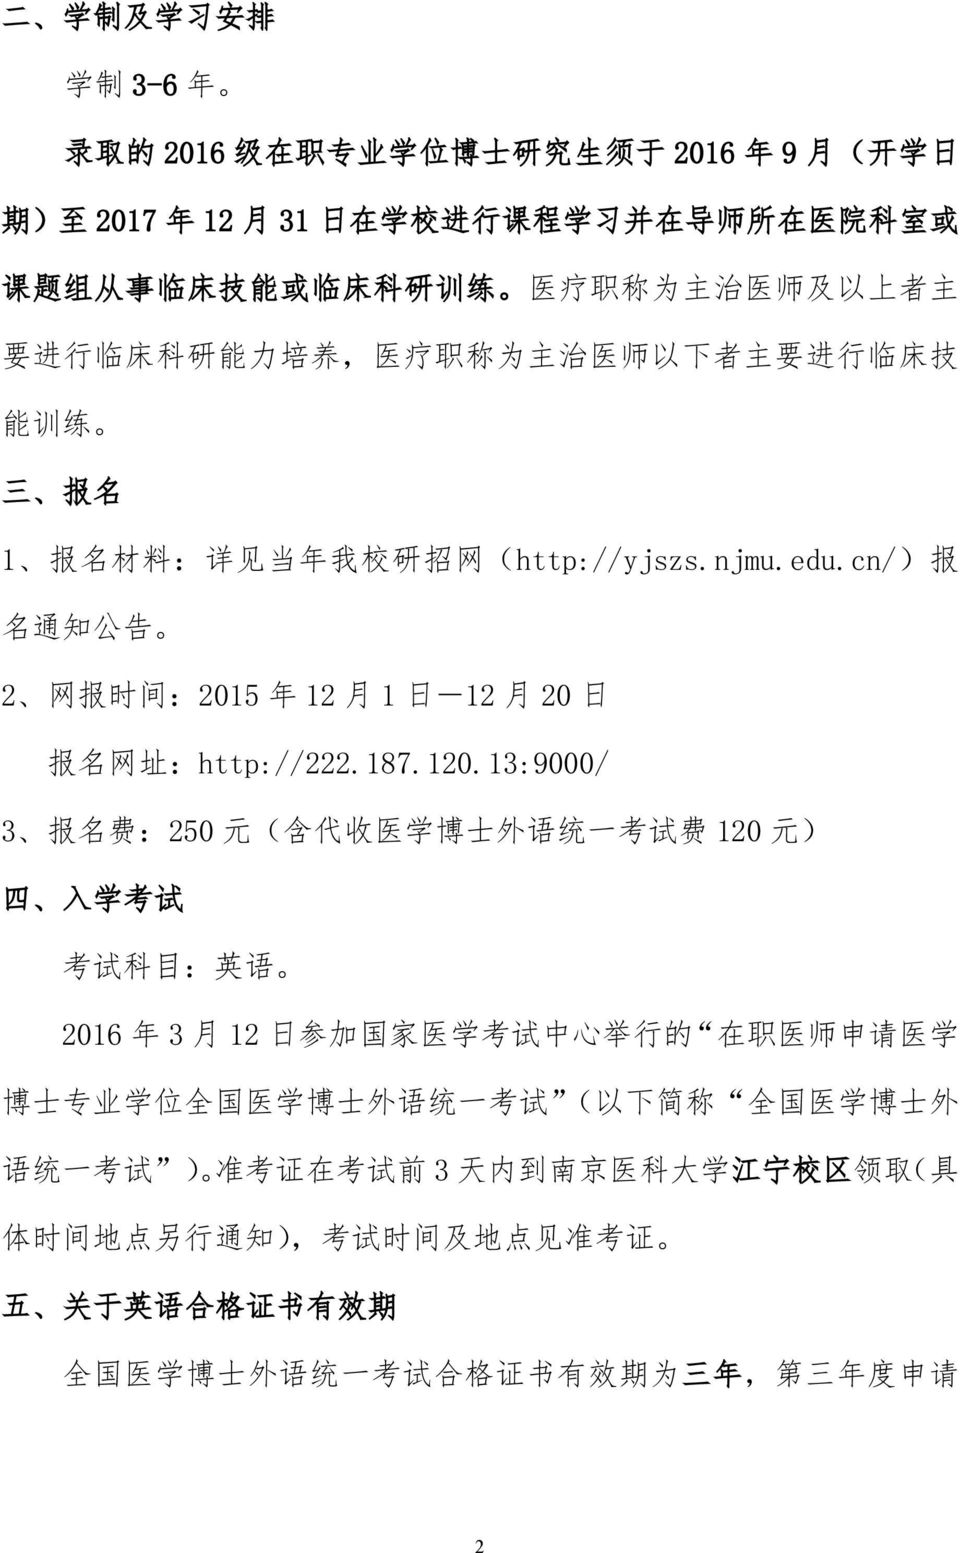 cn/) 报 名 通 知 公 告 2 网 报 时 间 :2015 年 12 月 1 日 -12 月 20 日 报 名 网 址 :http://222.187.120.